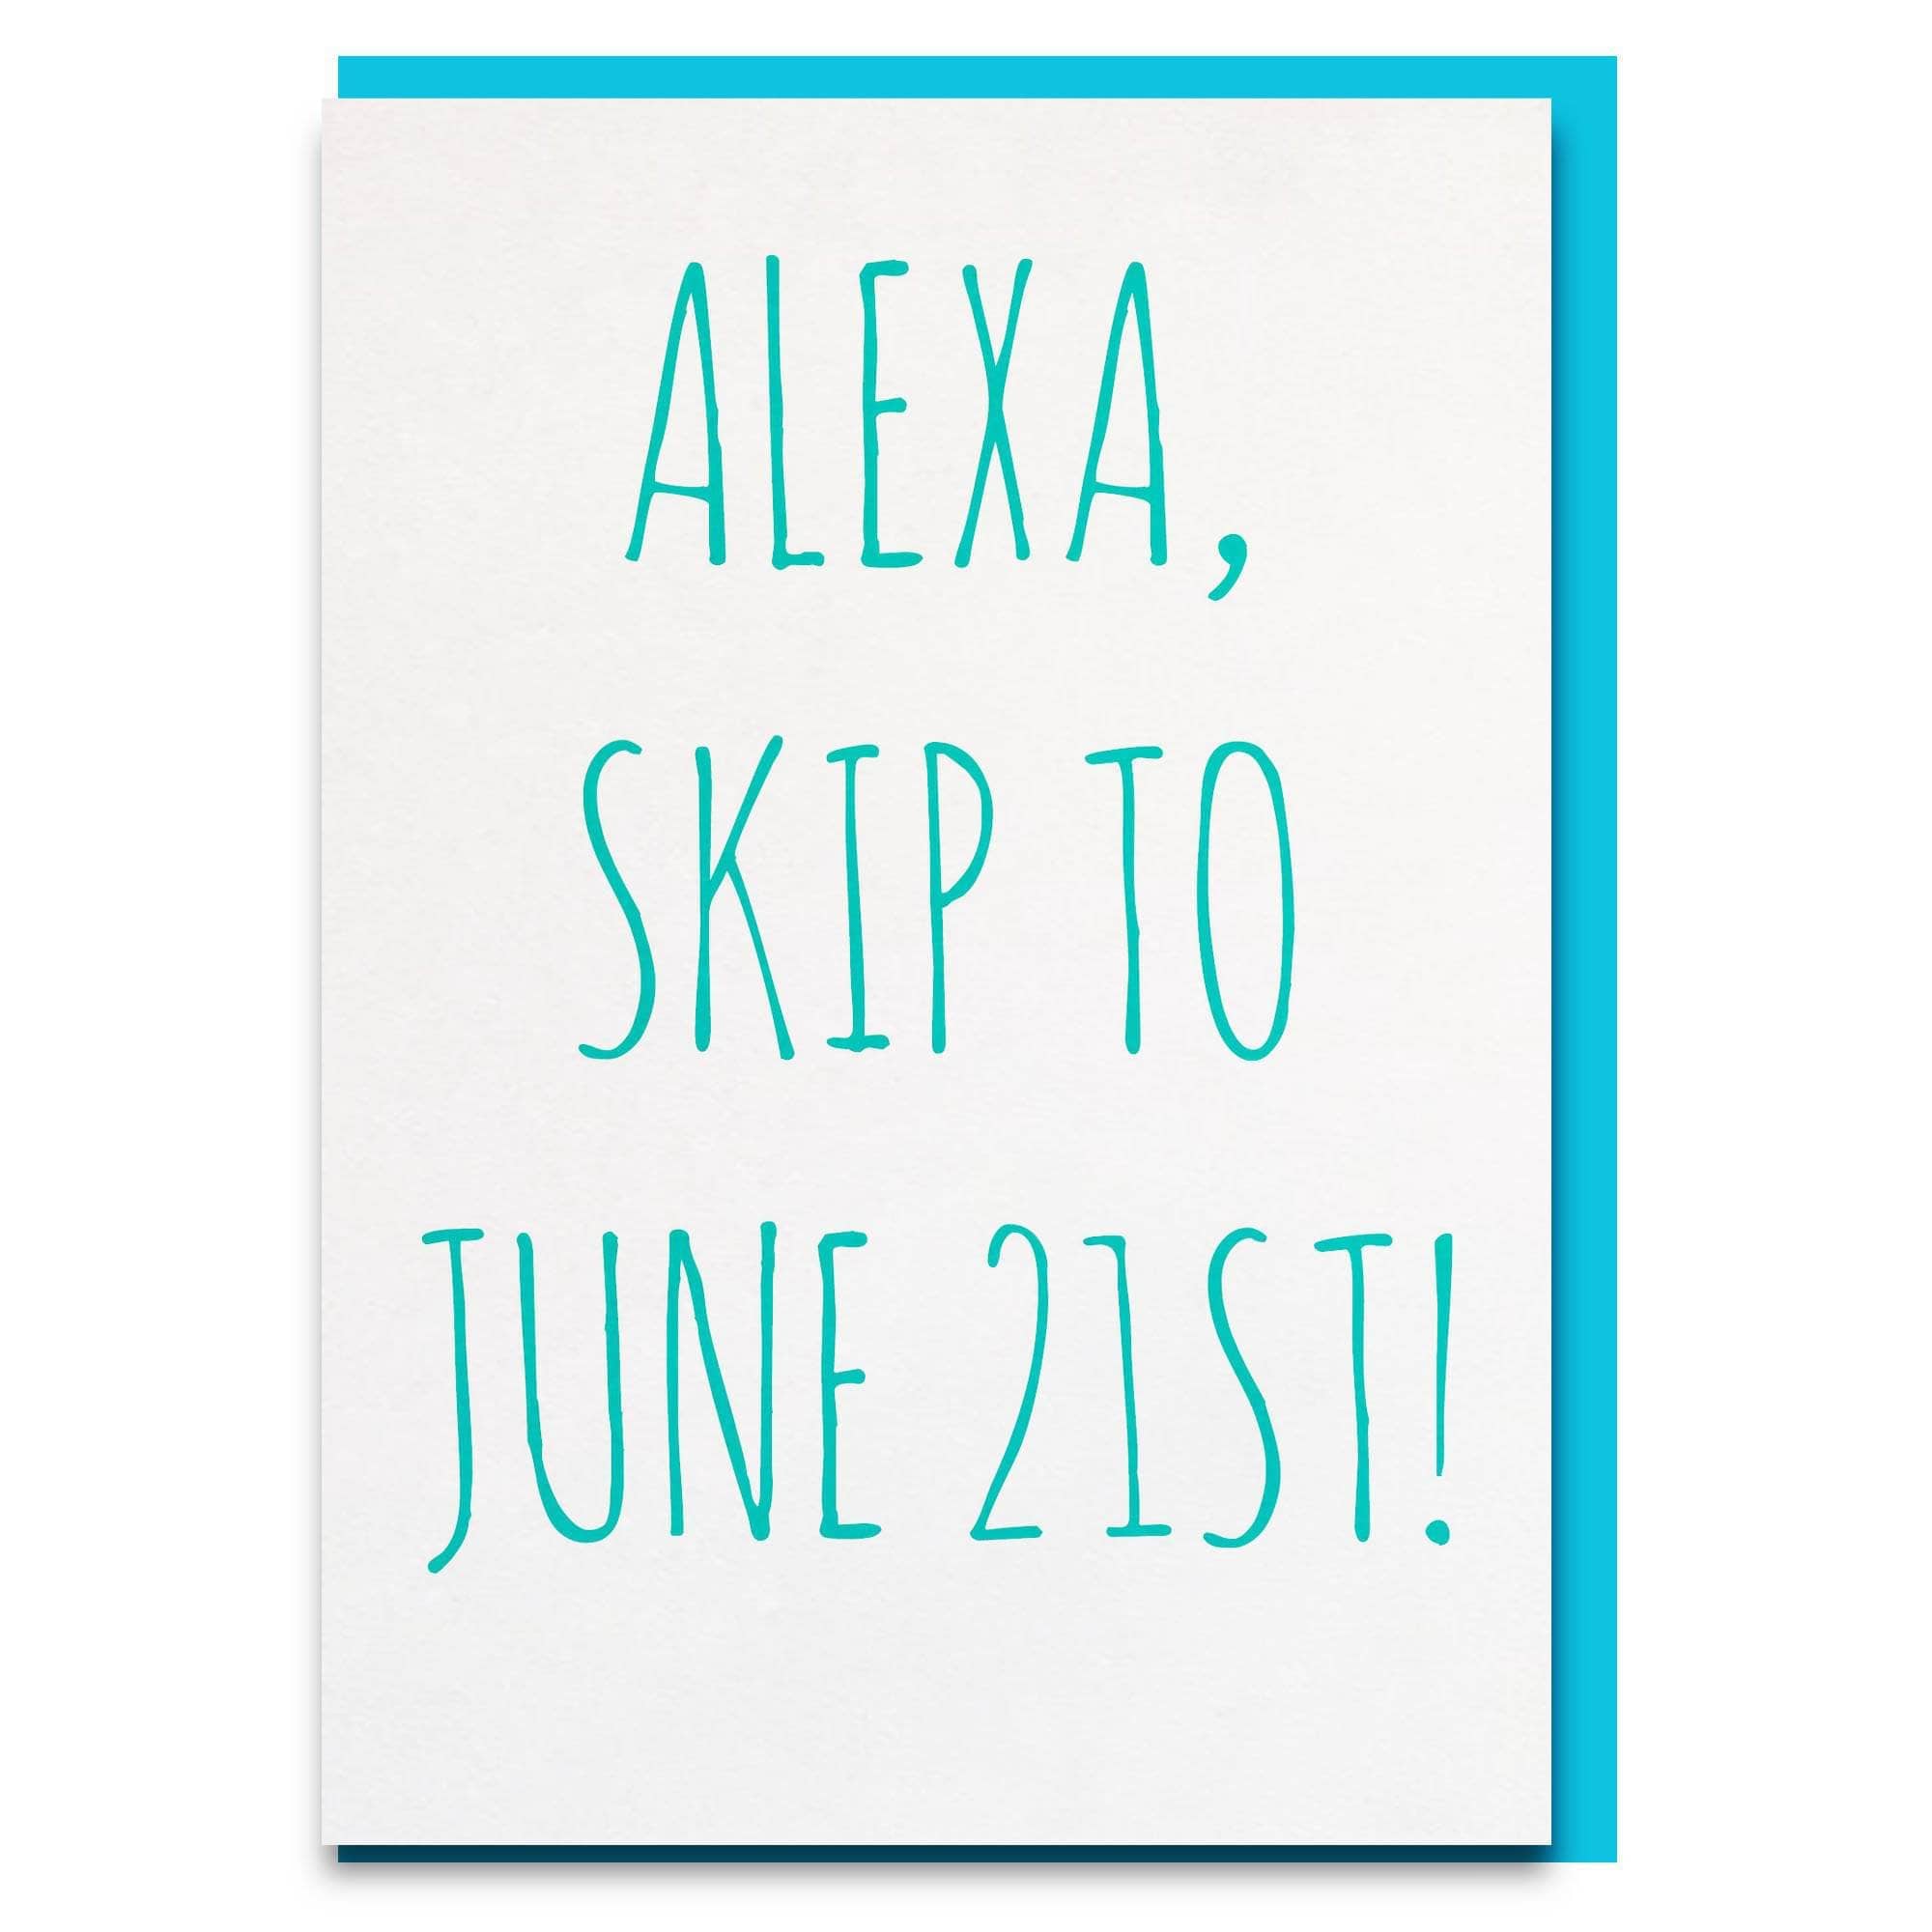 Alexa June 21st